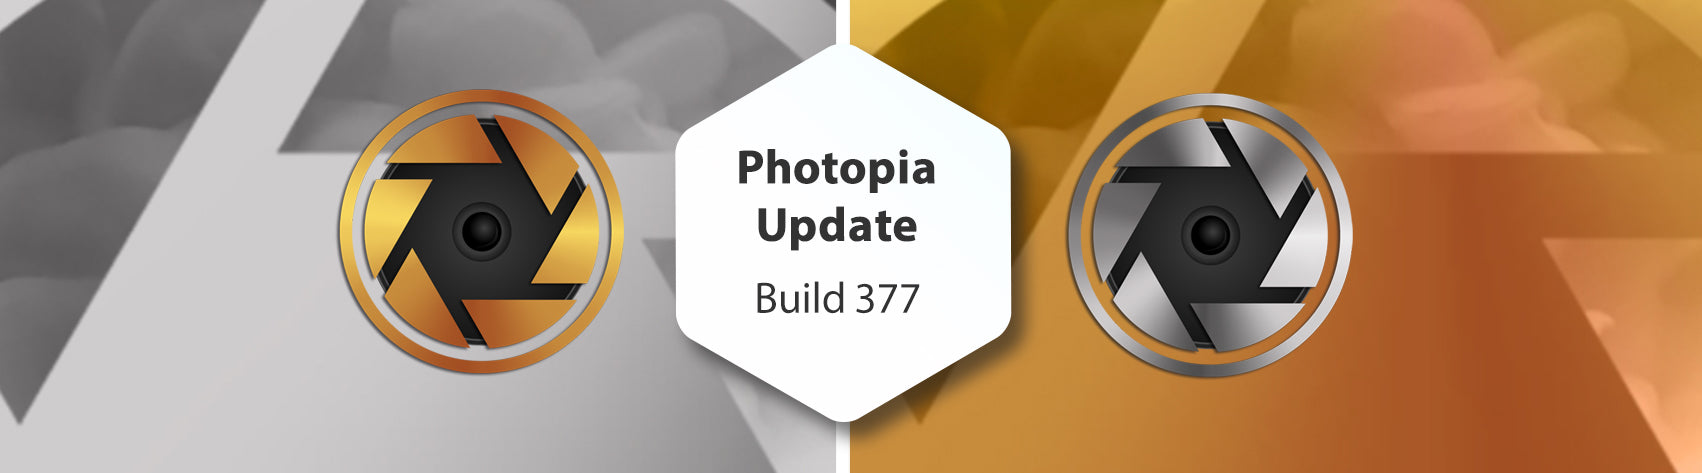 Photopia Update - Build 377